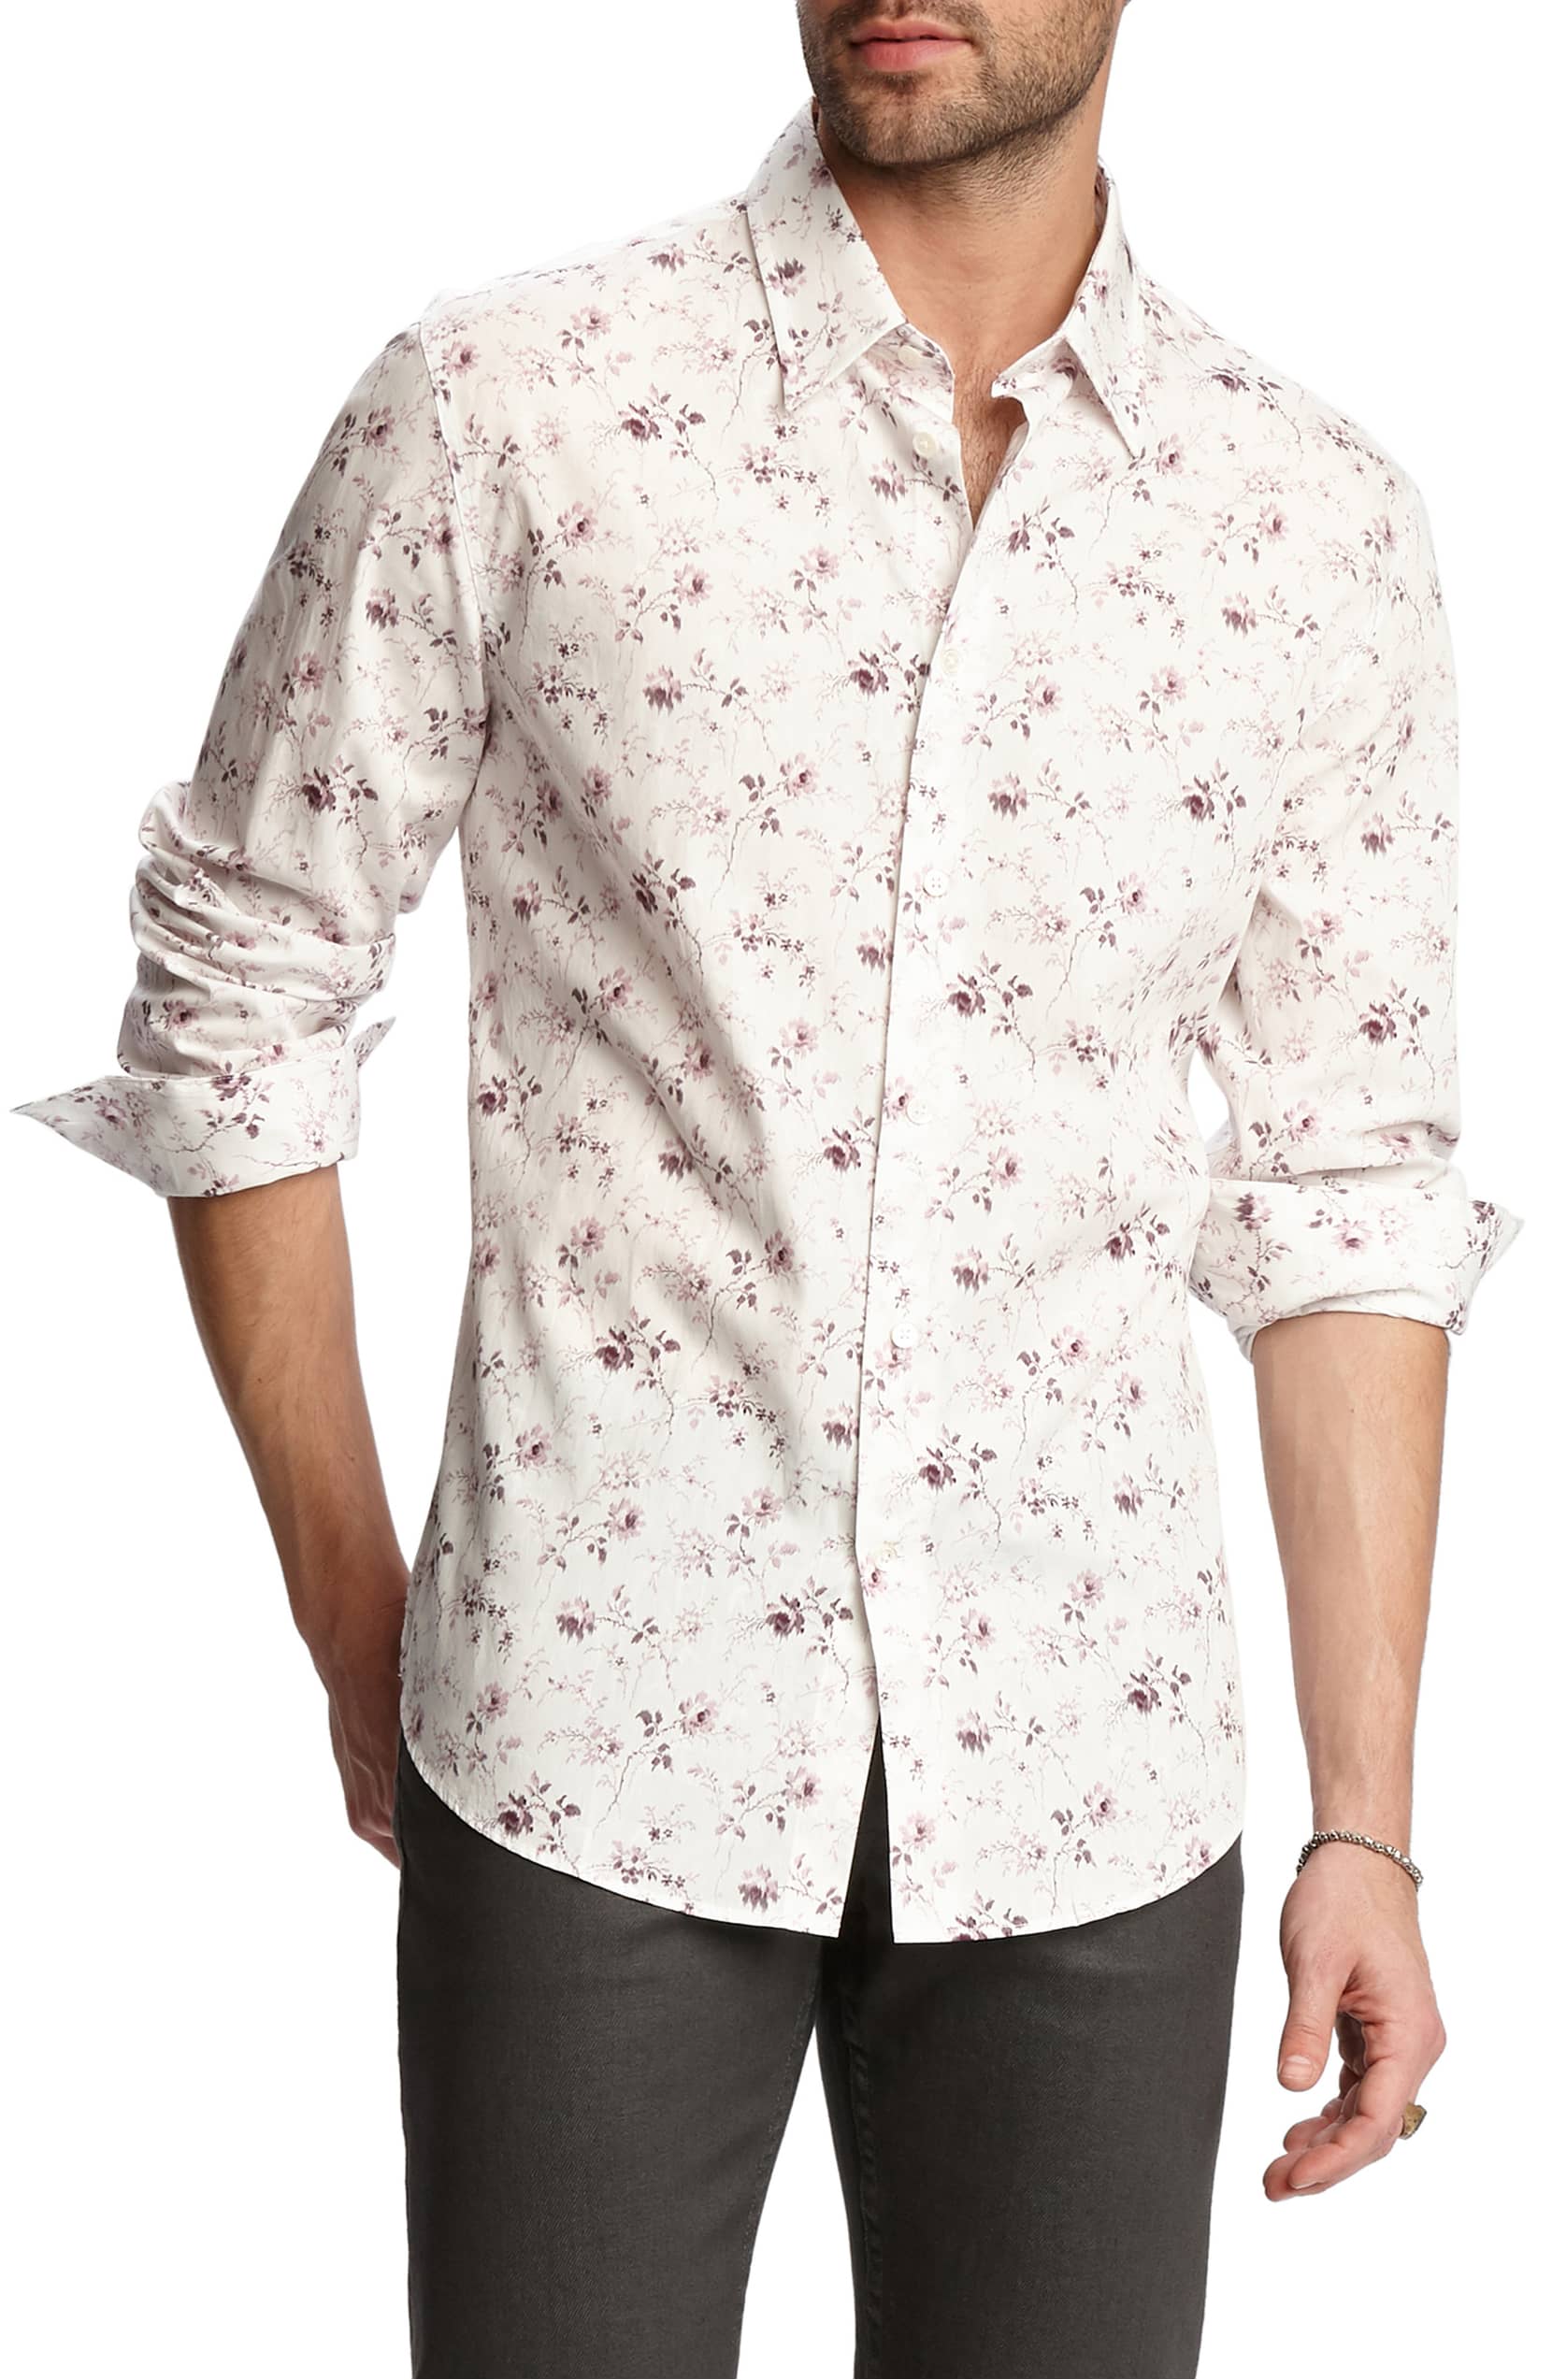 VITryst-Men Floral Print Multicam Leisure Buttoned Stylish Shirt Tops 